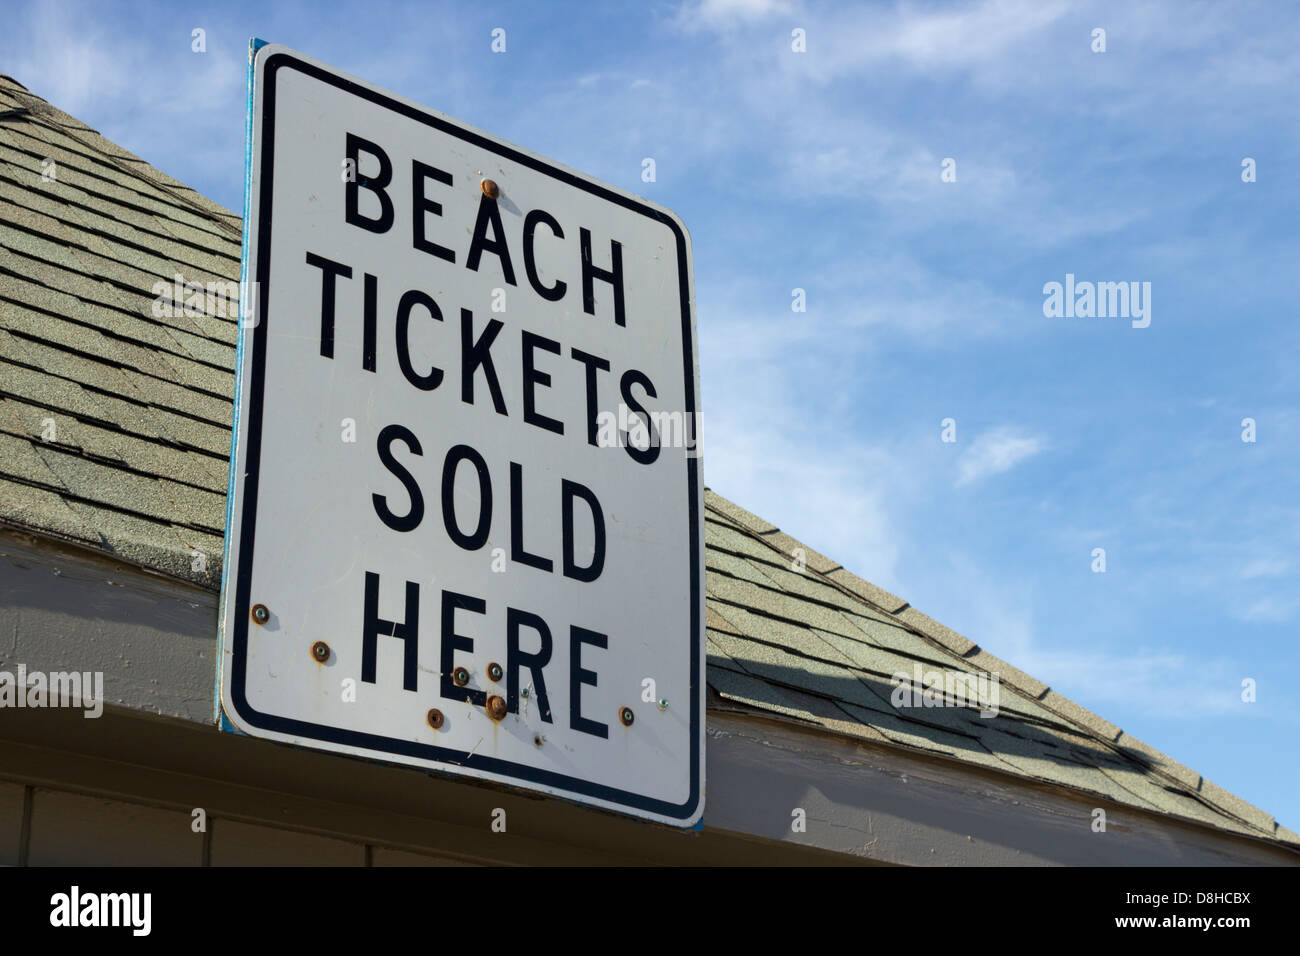 Beach billets vendus ici, Jersey Shore, Asbury Park, New Jersey, USA Banque D'Images